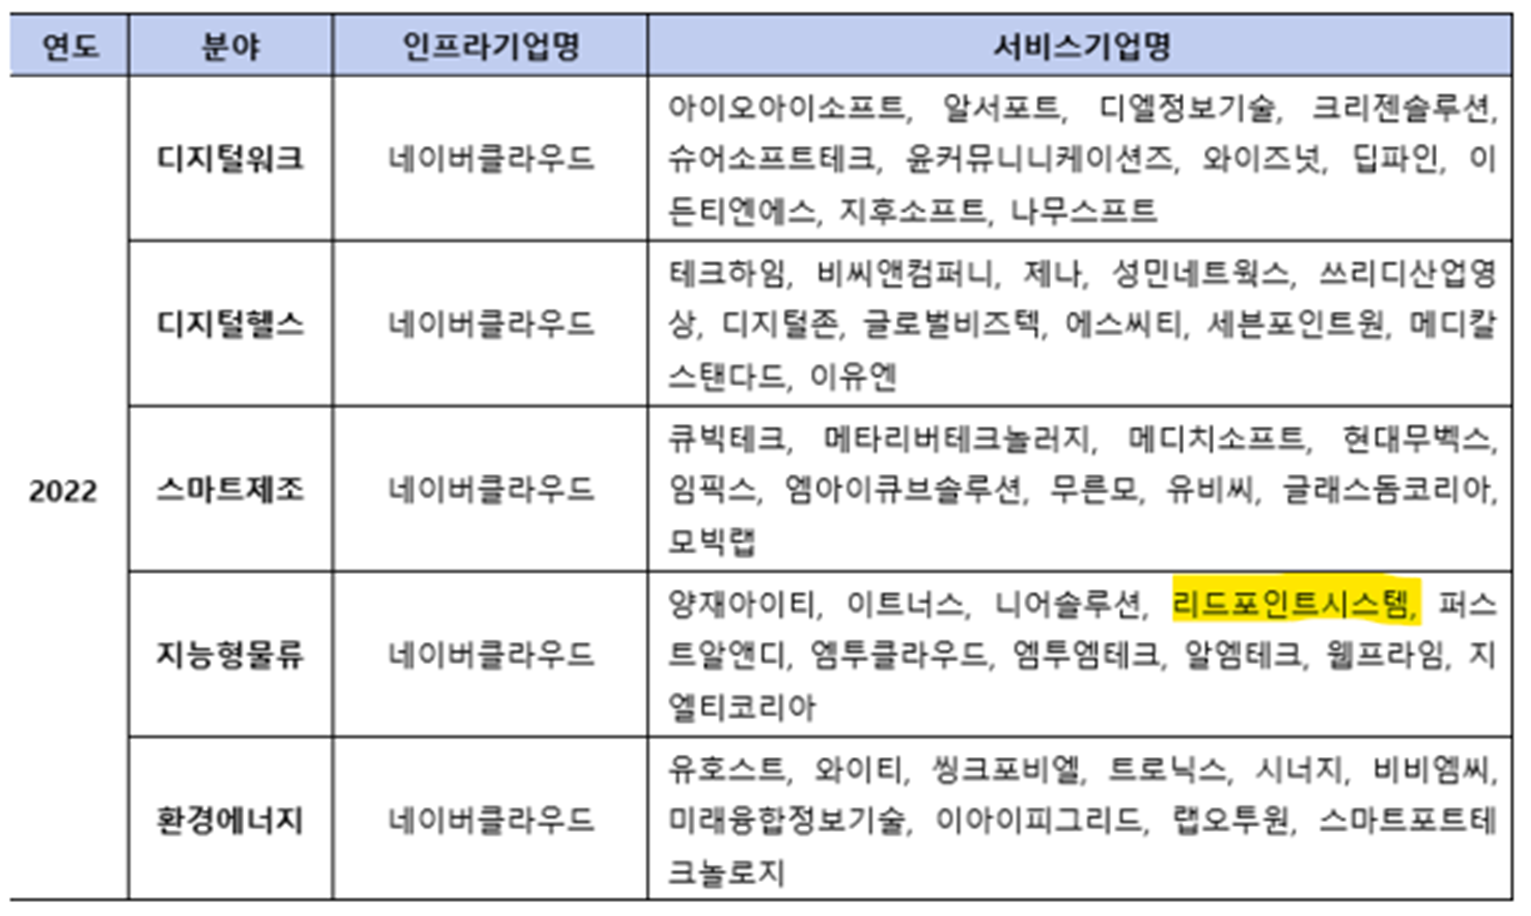 [Cloud Flagship ②] 25 Billion Won was Provided to 52 SaaS Development Companies Last Year